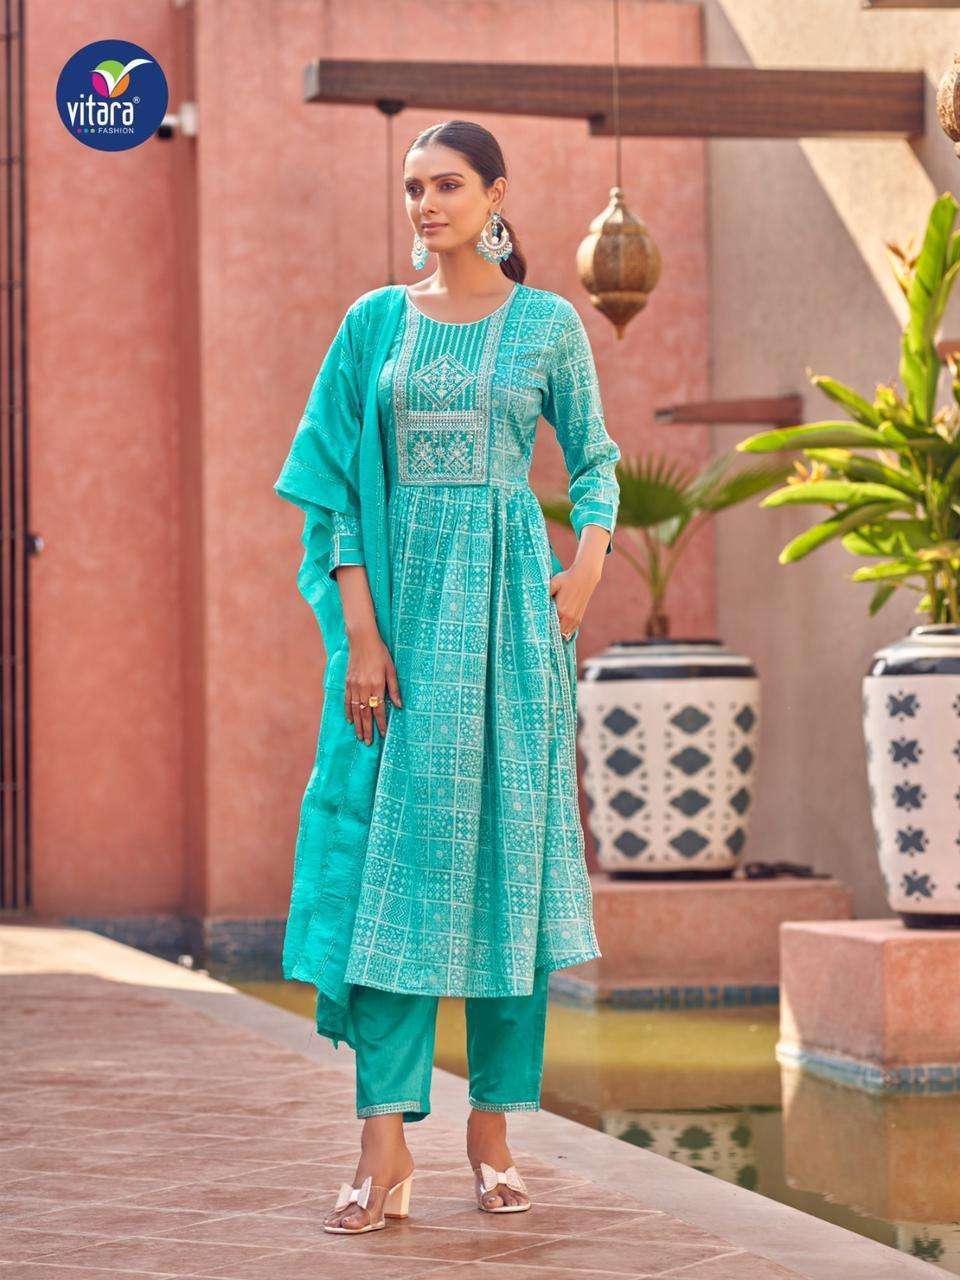 Sai Dhara Nx Naira By Vitara 1001 To 104 Series Beautiful Festive Suits Colorful Stylish Fancy Casual Wear & Ethnic Wear Heavy Rayon Dresses Wholesale Rate In Surat - SaiDharaNx 